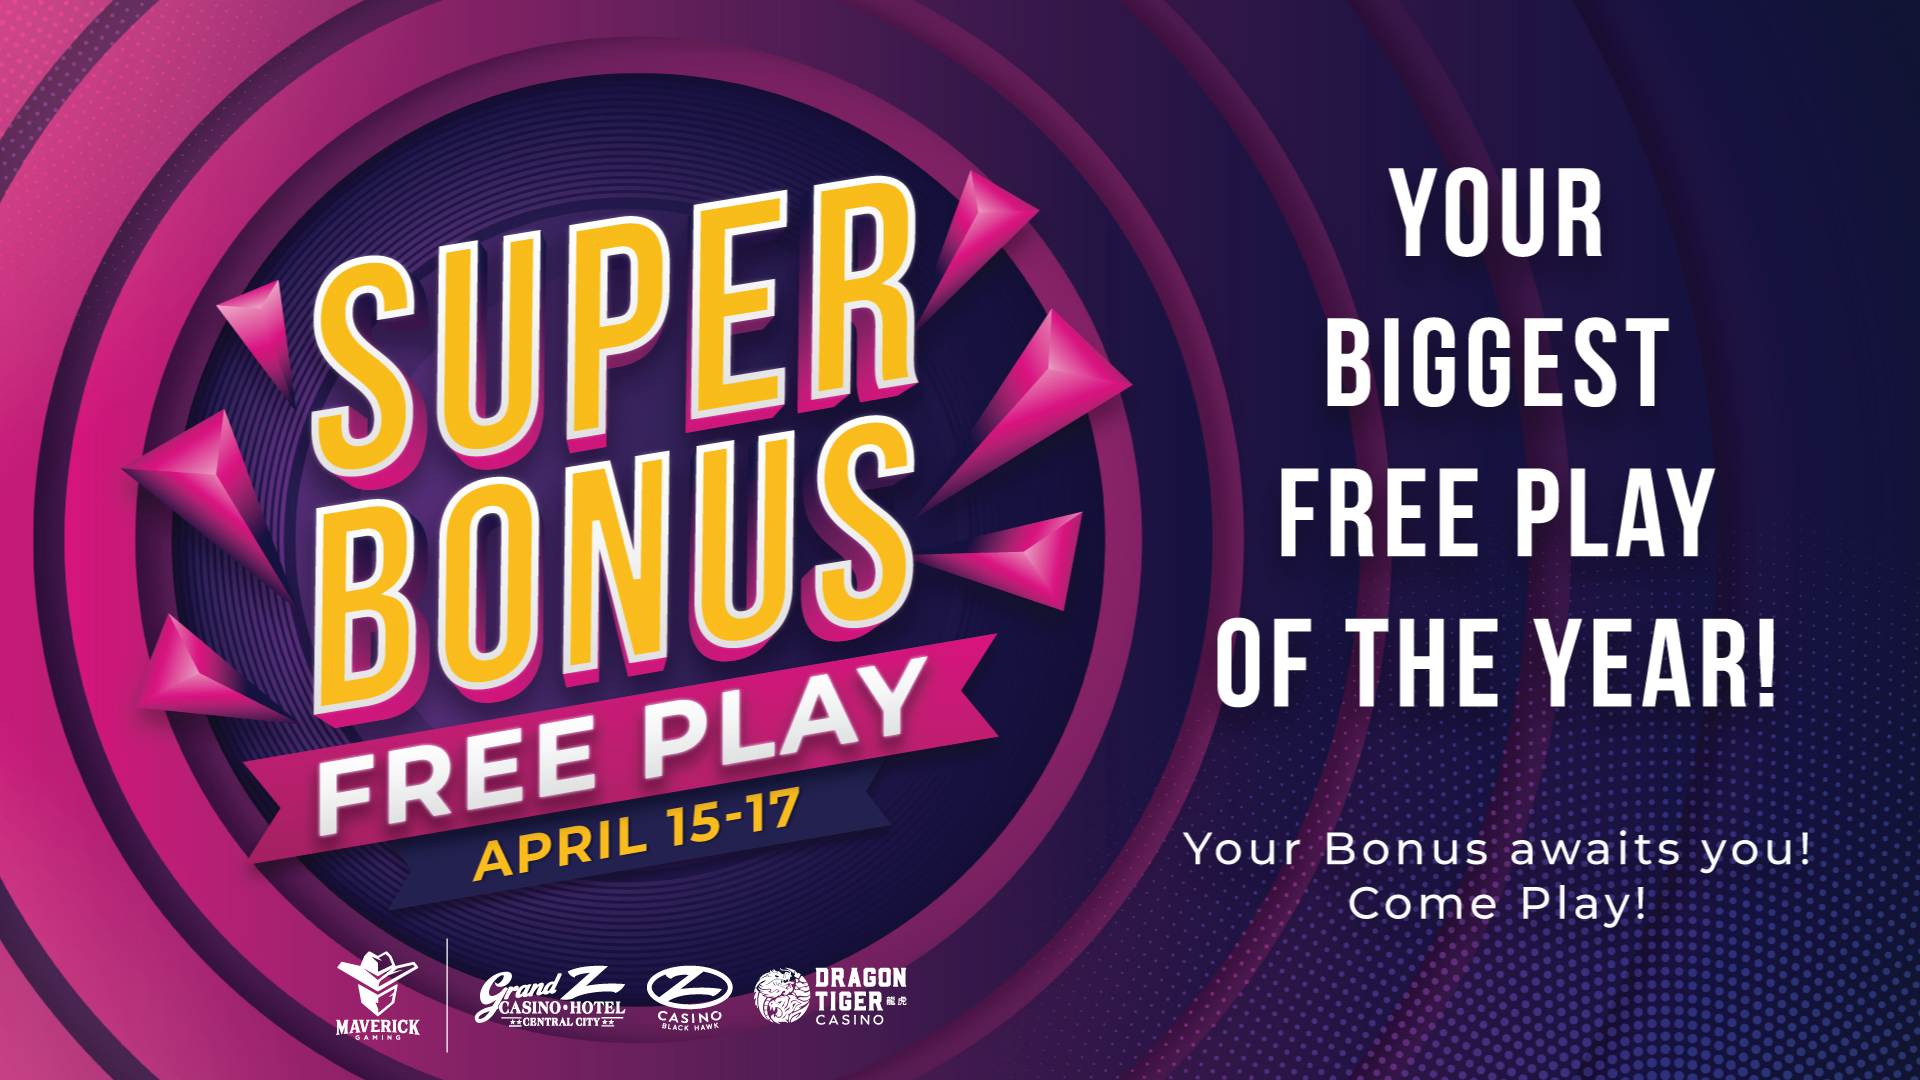 Super Bonus Free Play!